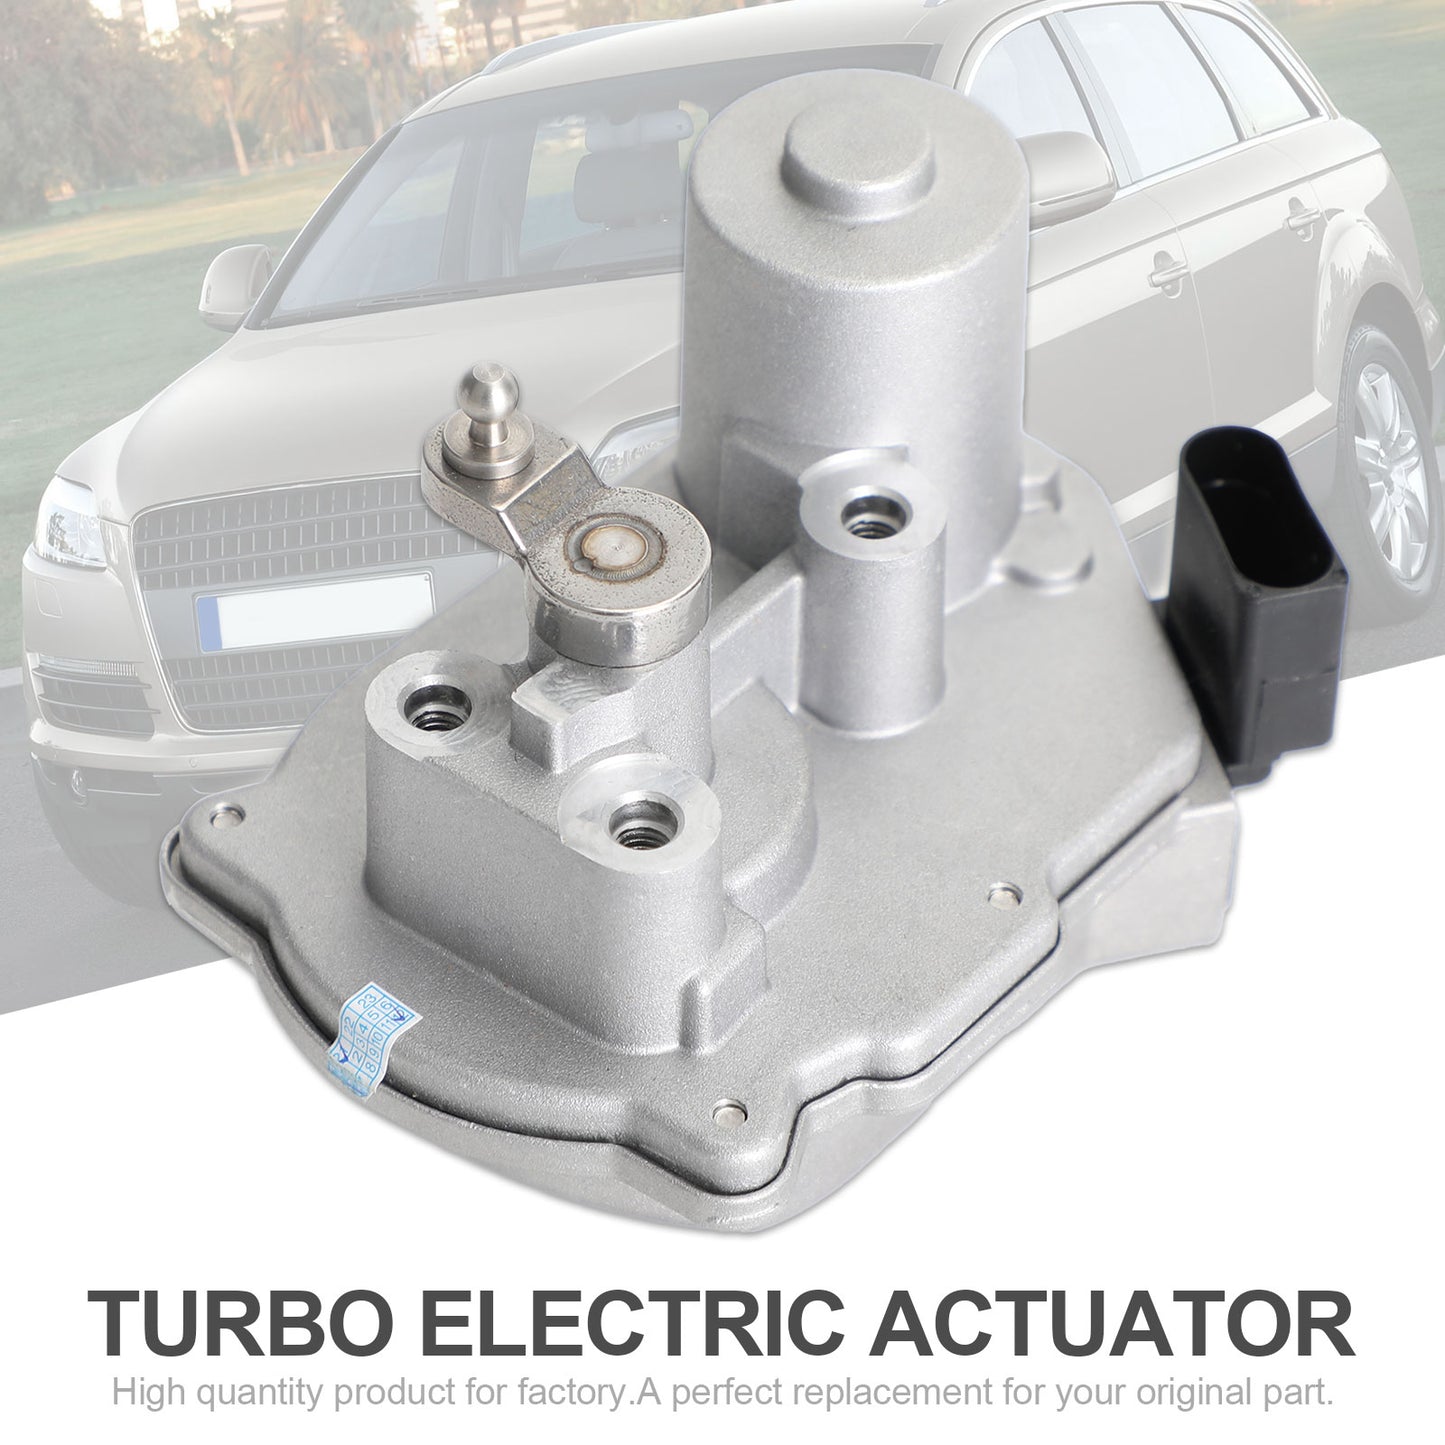 Elektrischer Turboantrieb für Audi A4 A6 A8 2.7 3.0 TDI 059145725J 59001107055